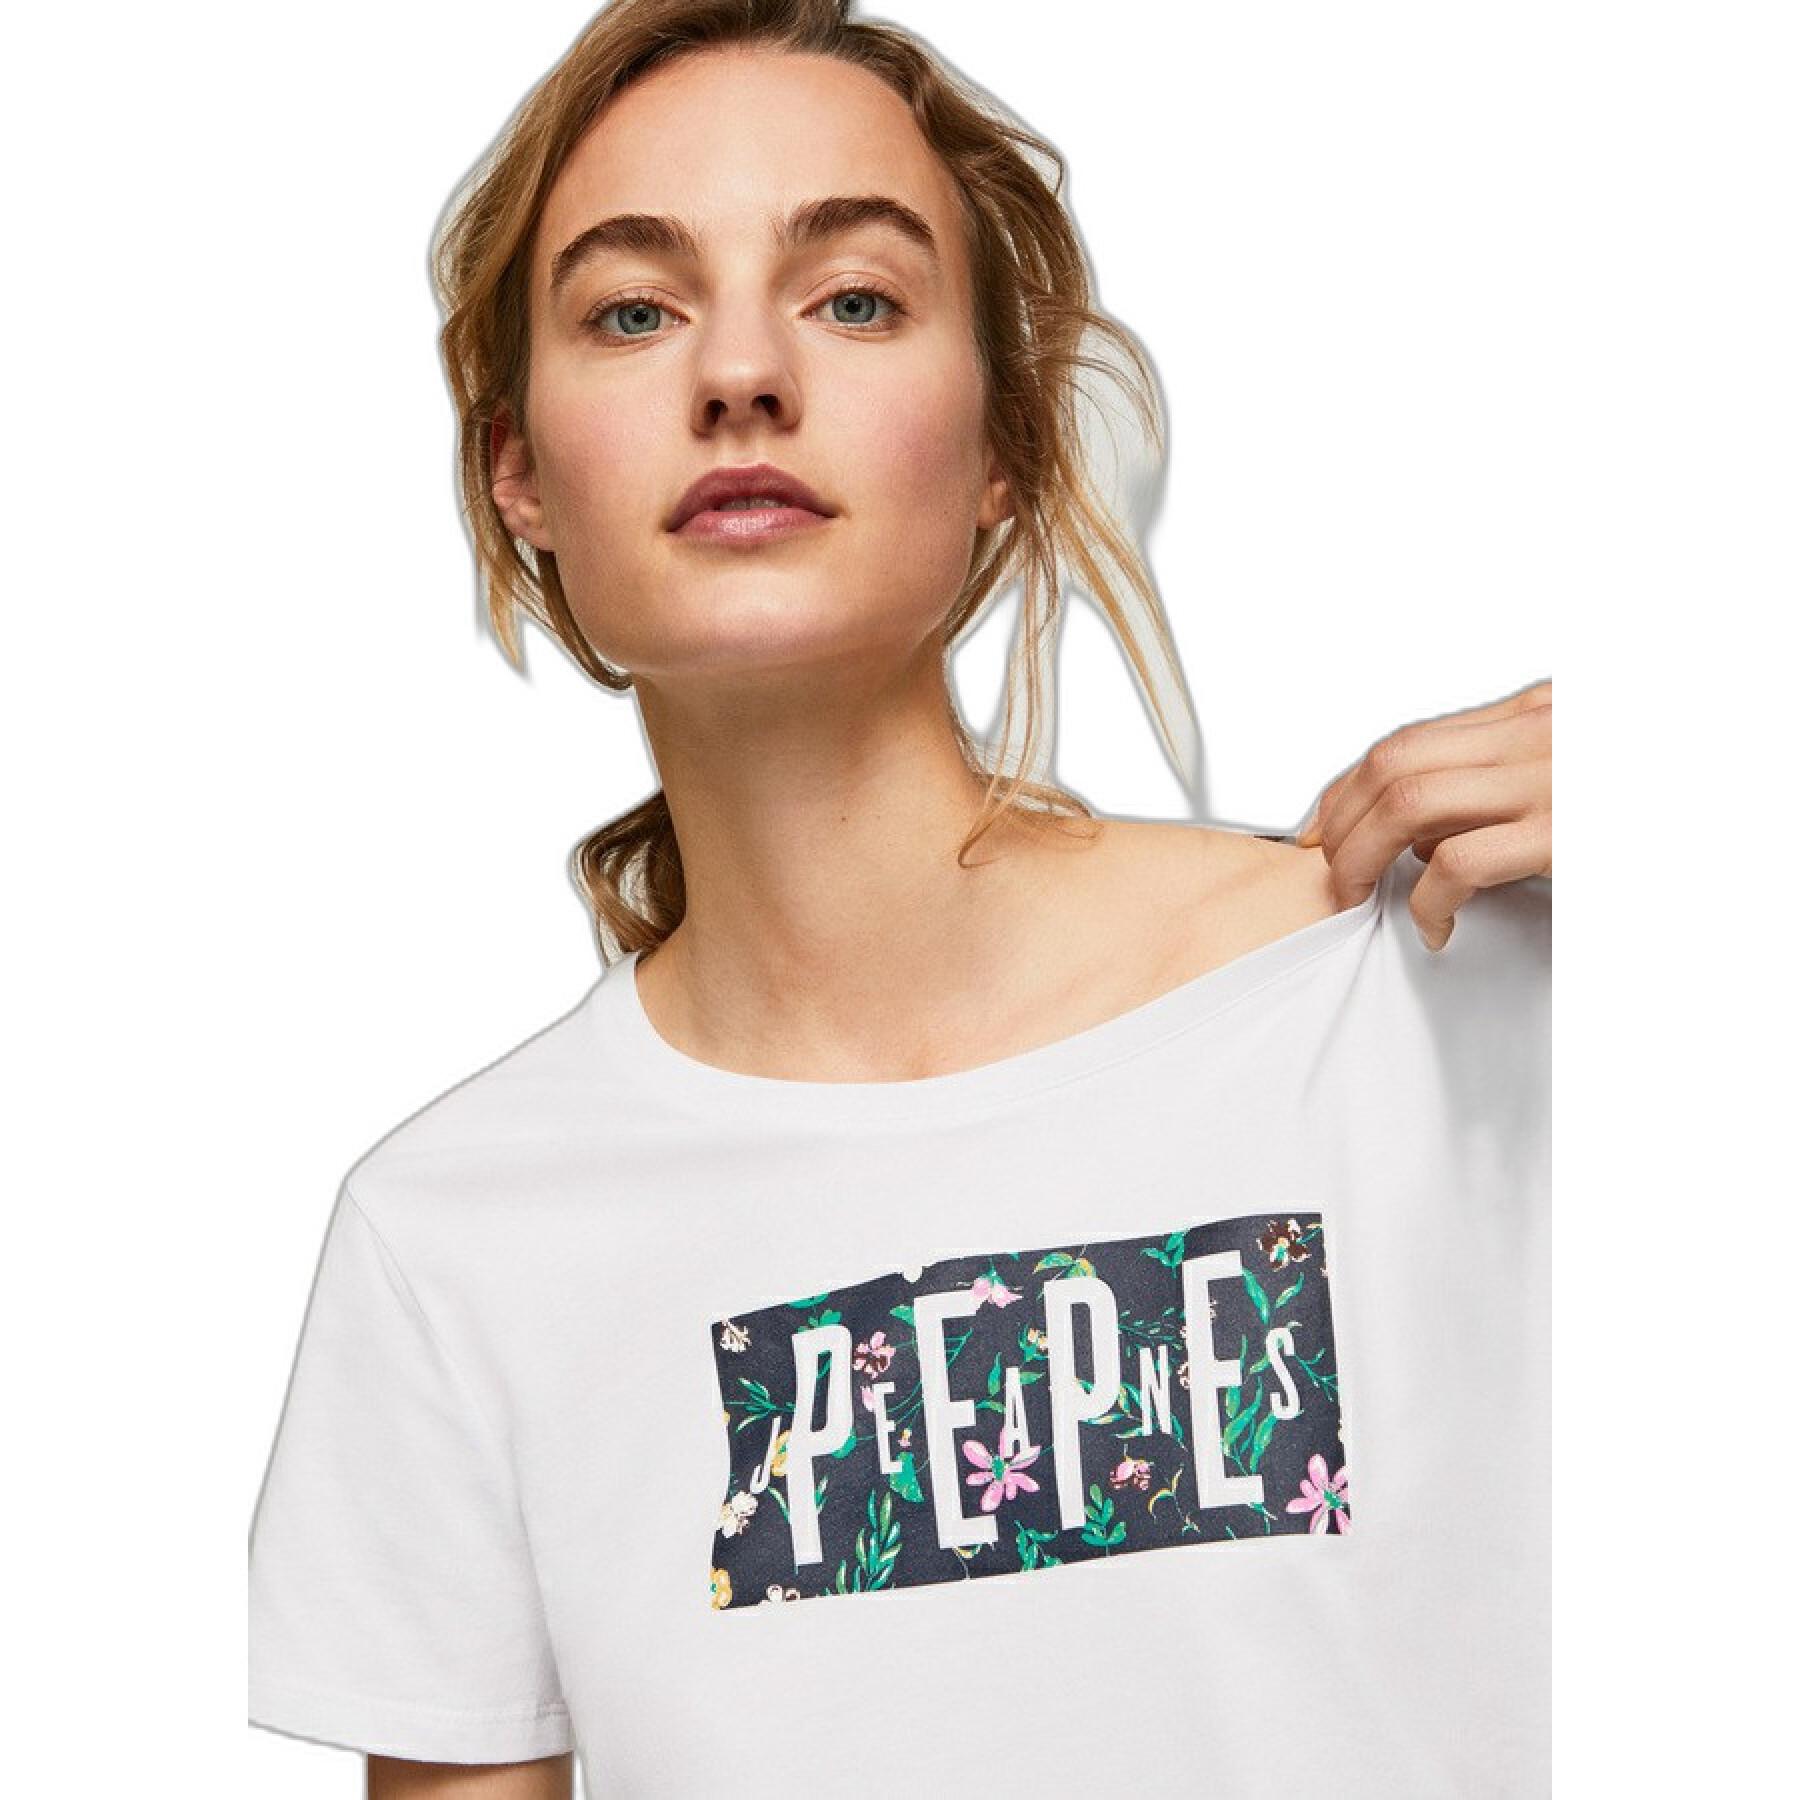 Women's T-shirt Pepe Jeans Patsy